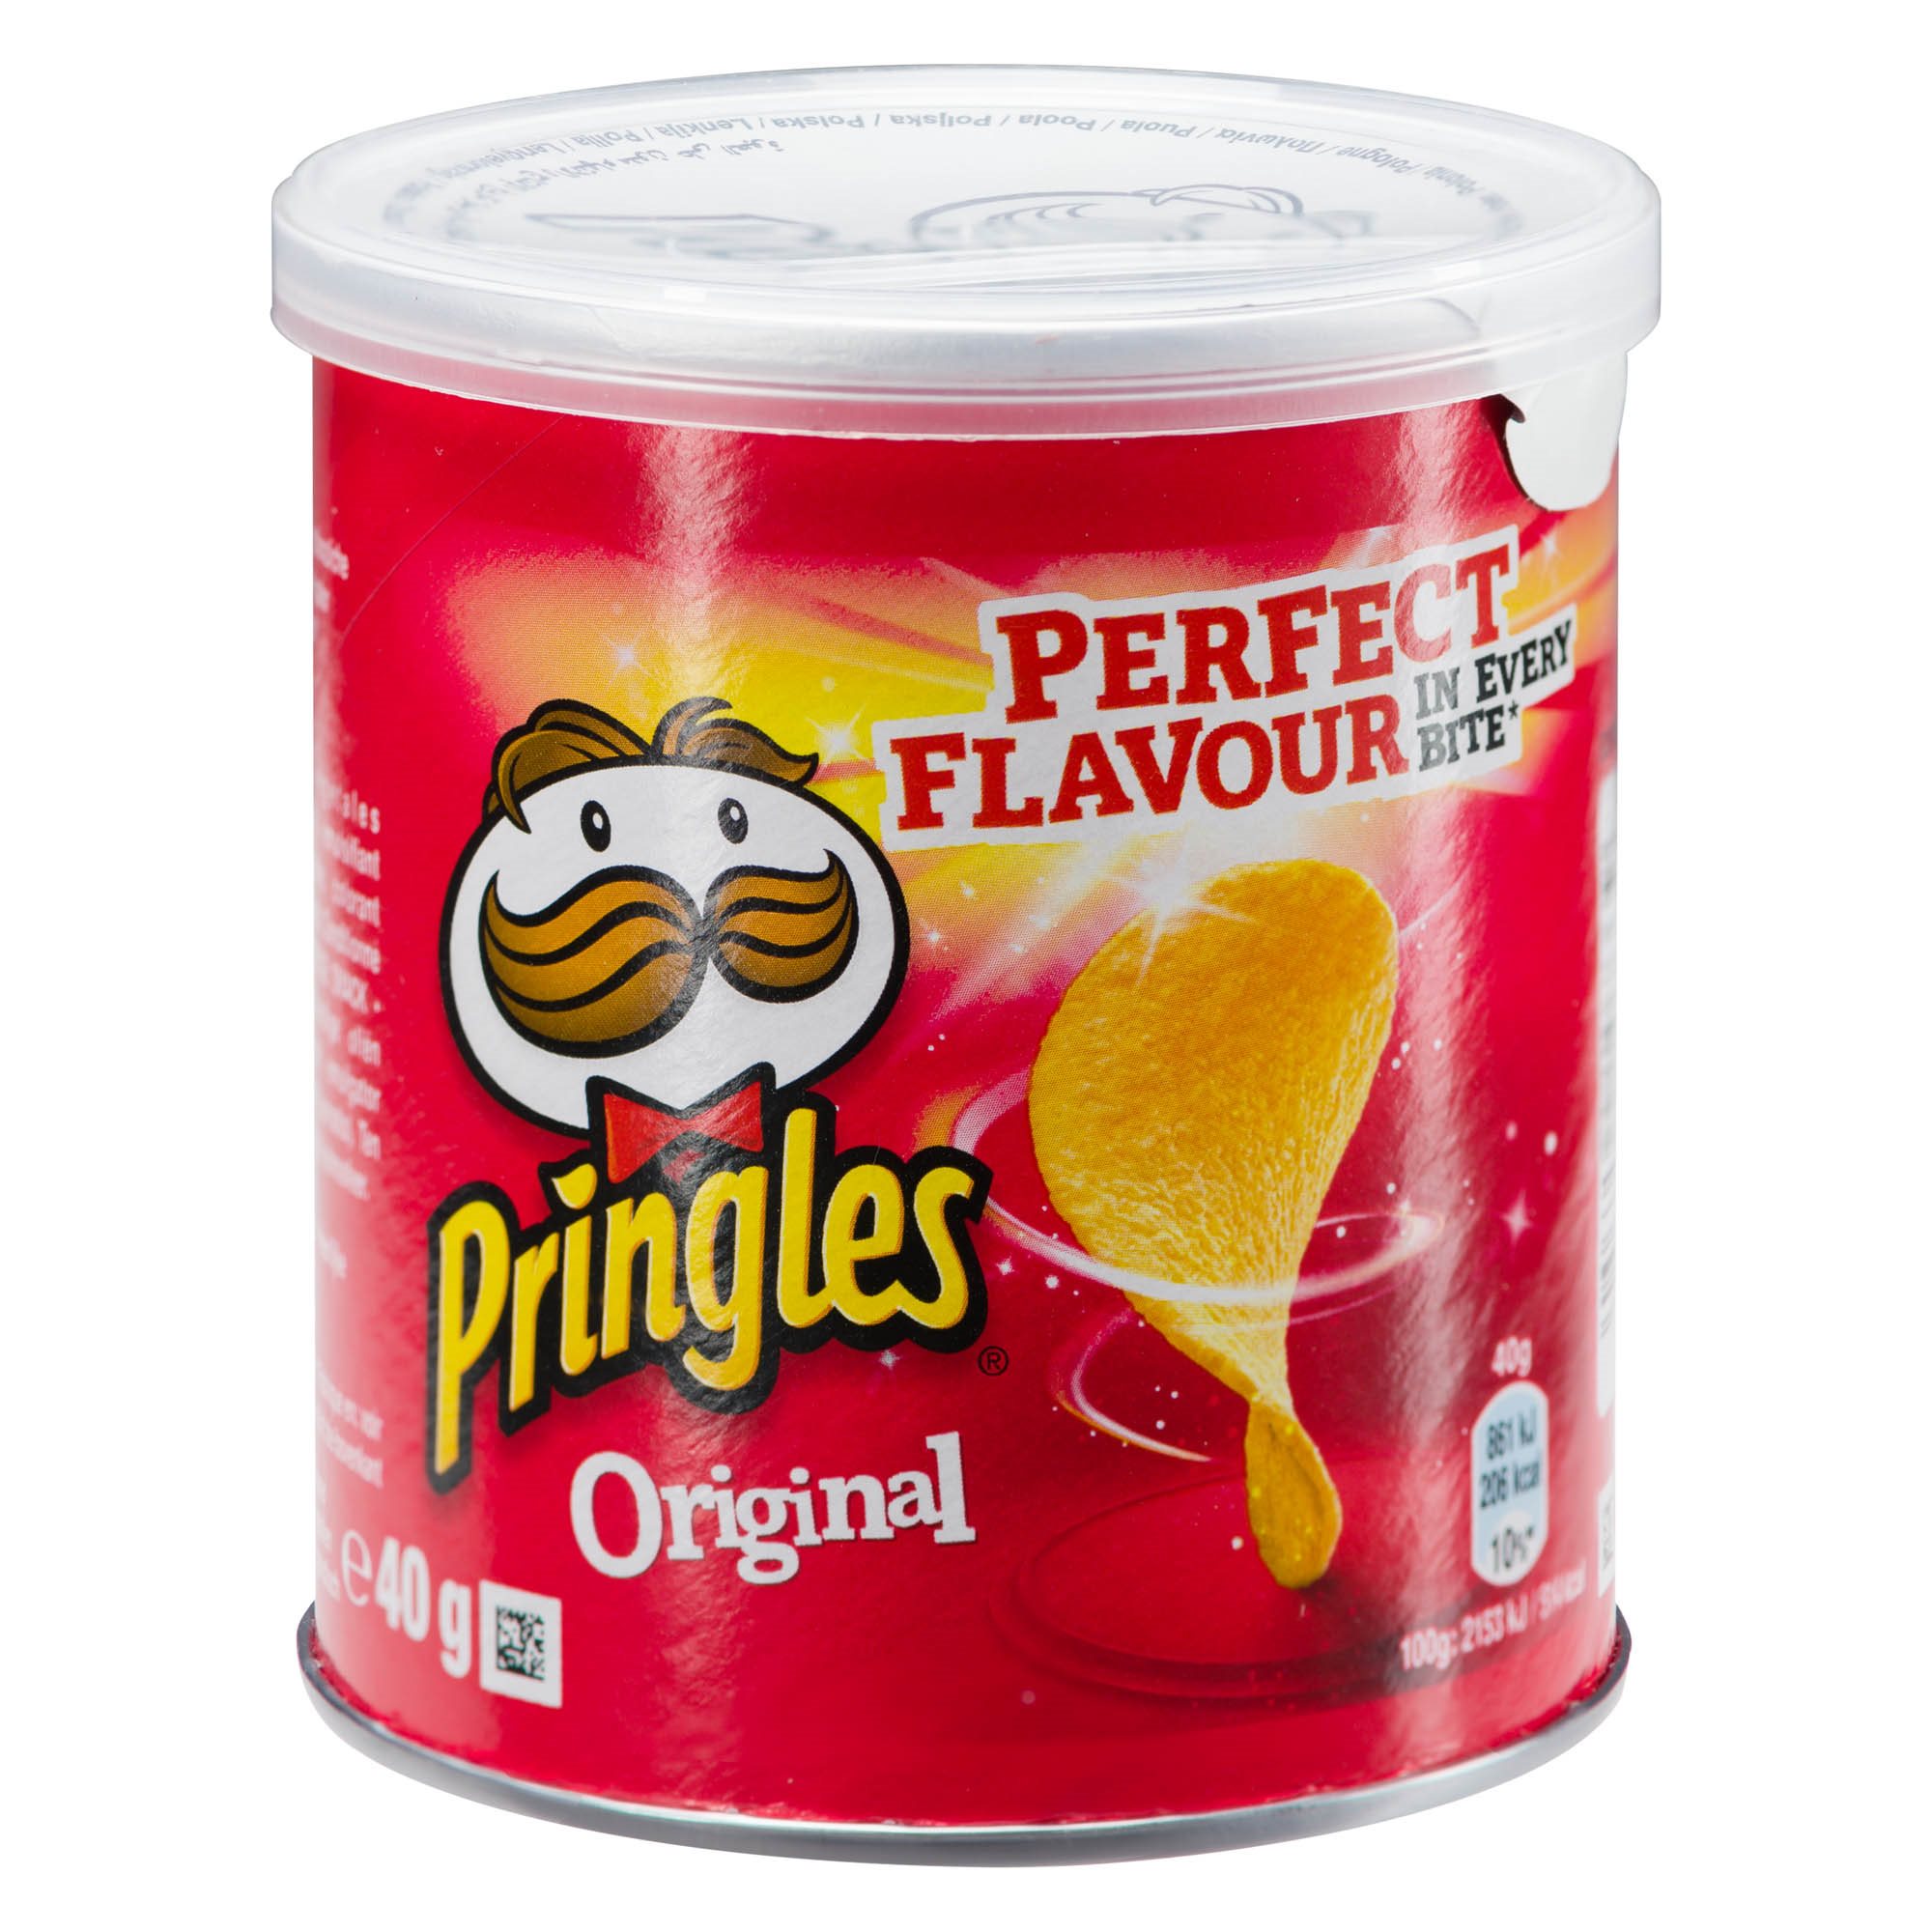 Pringles Original Flavour Potato Chips, 40 g, Pack of 12 - Bulkco